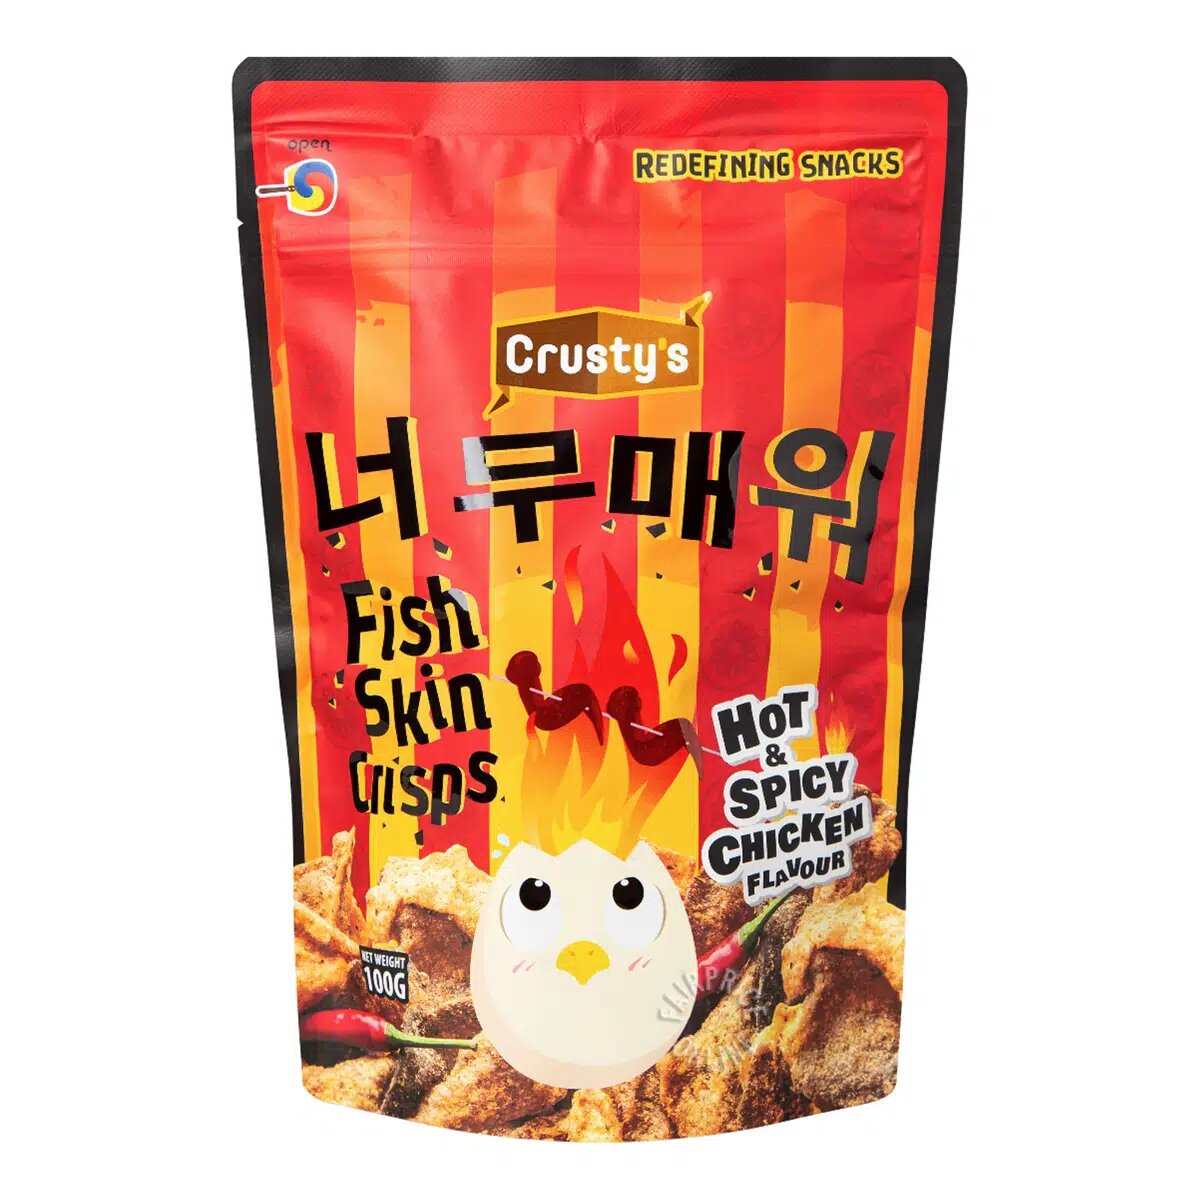 Crusty's Fish Skin Crisps - Hot & Spicy Chicken